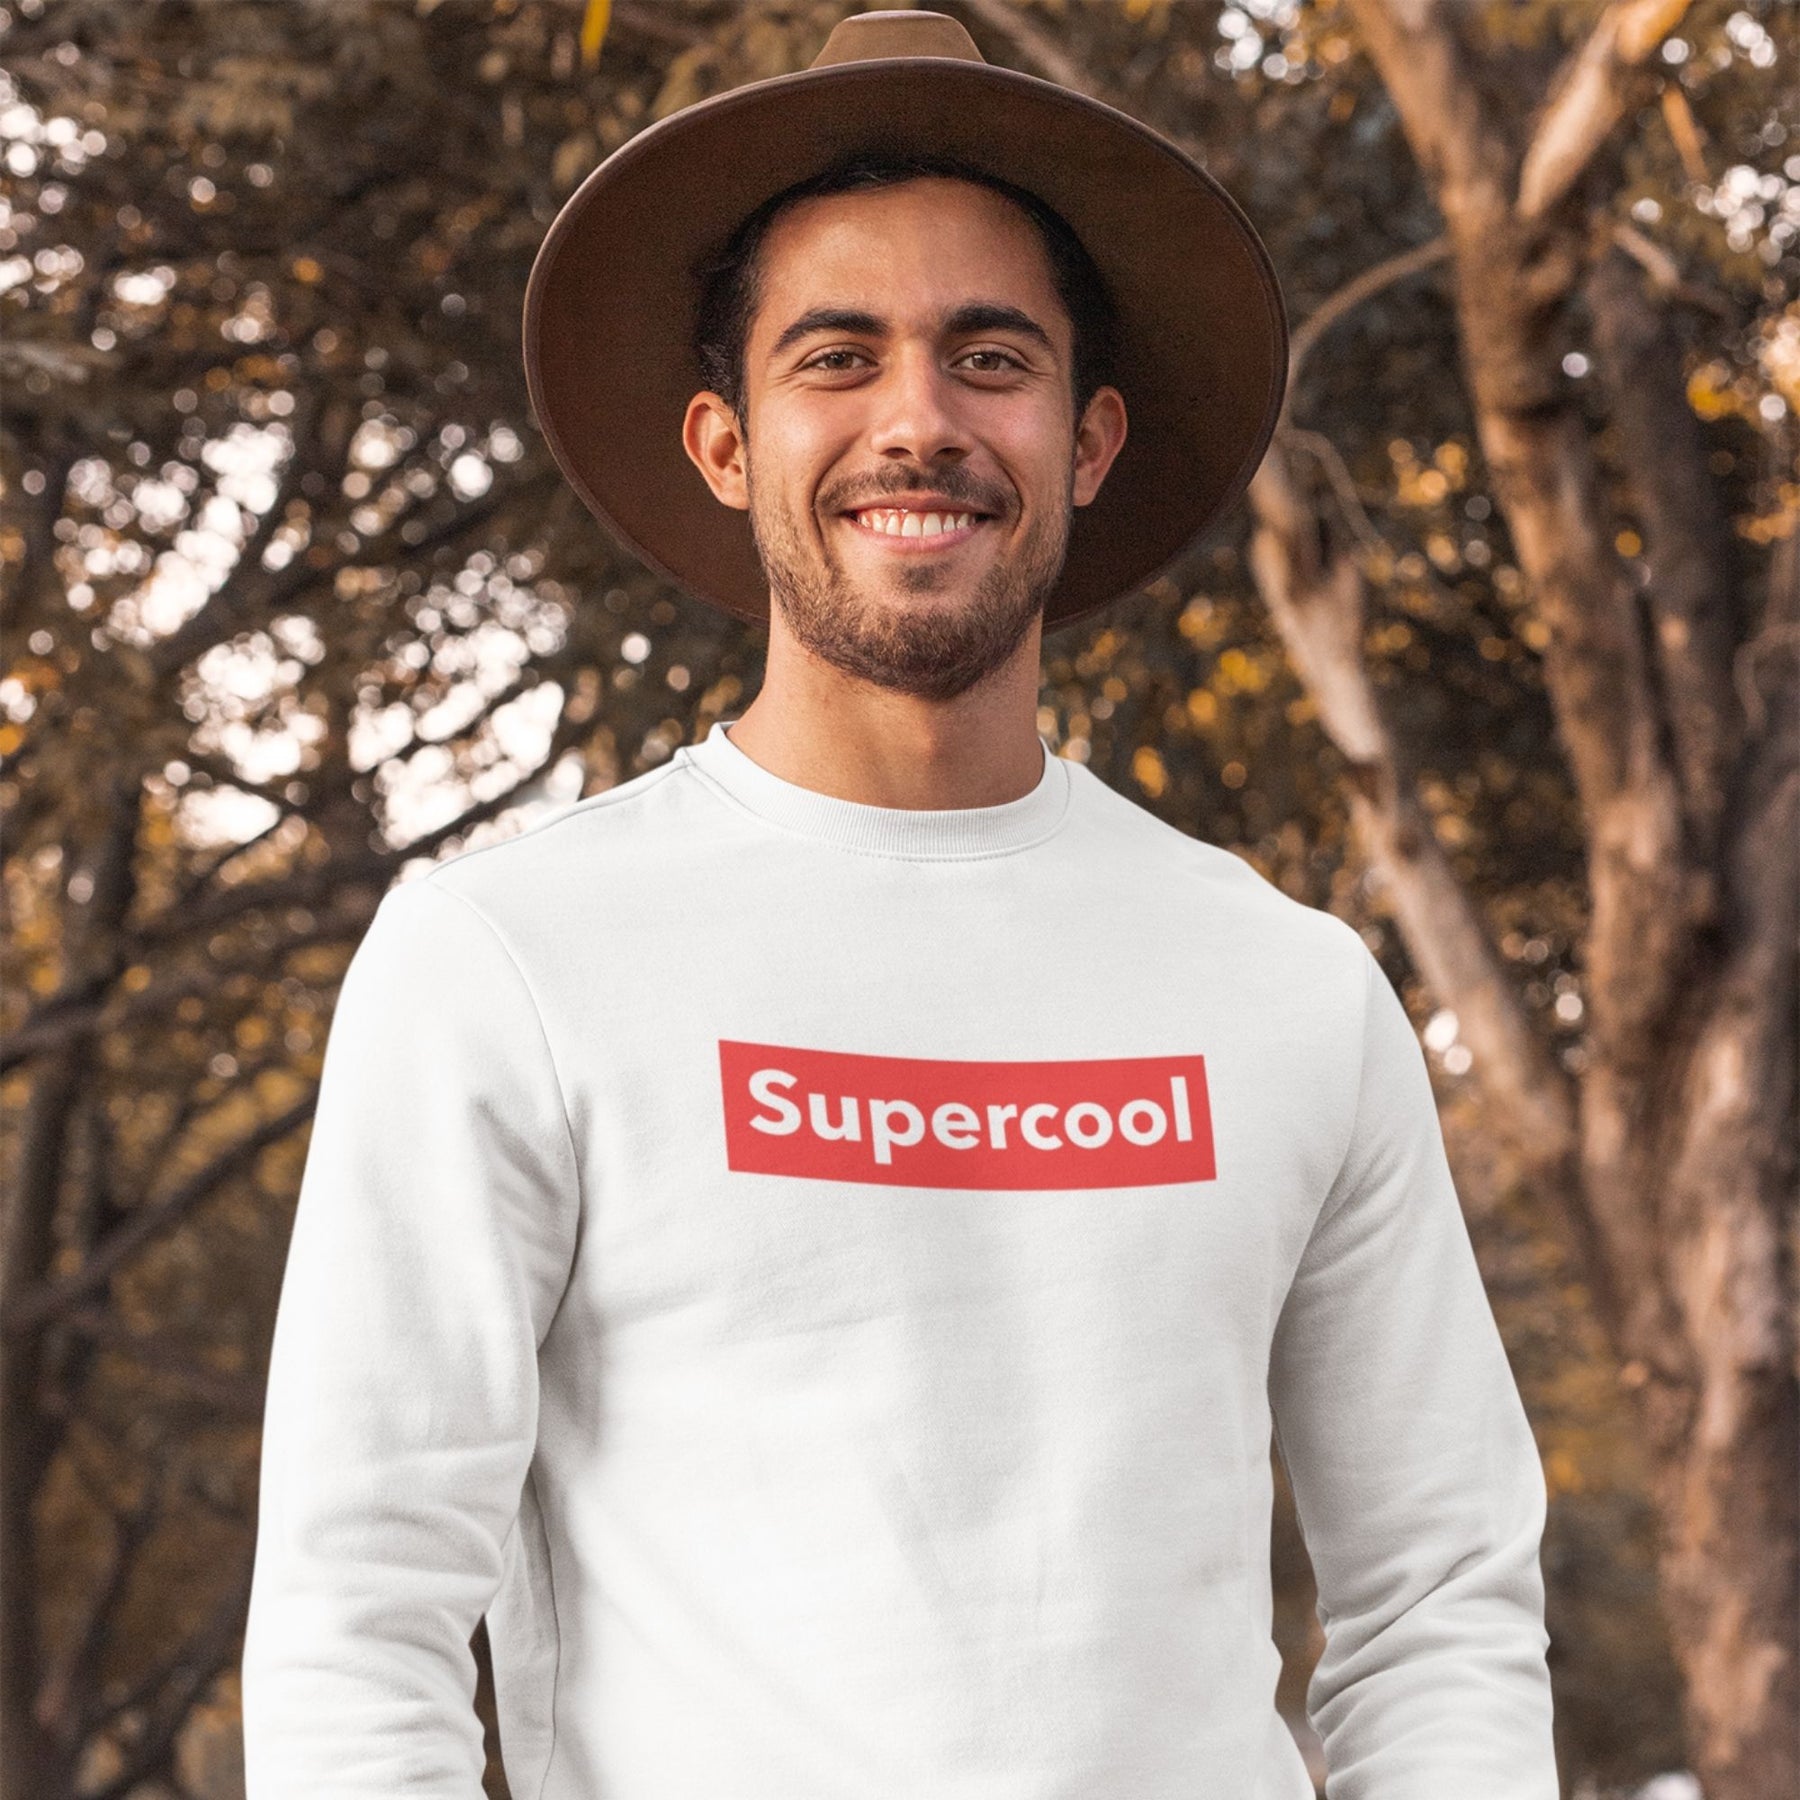 supercool-cotton-printed-unisex-white-men-model-sweatshirt-gogirgit-com